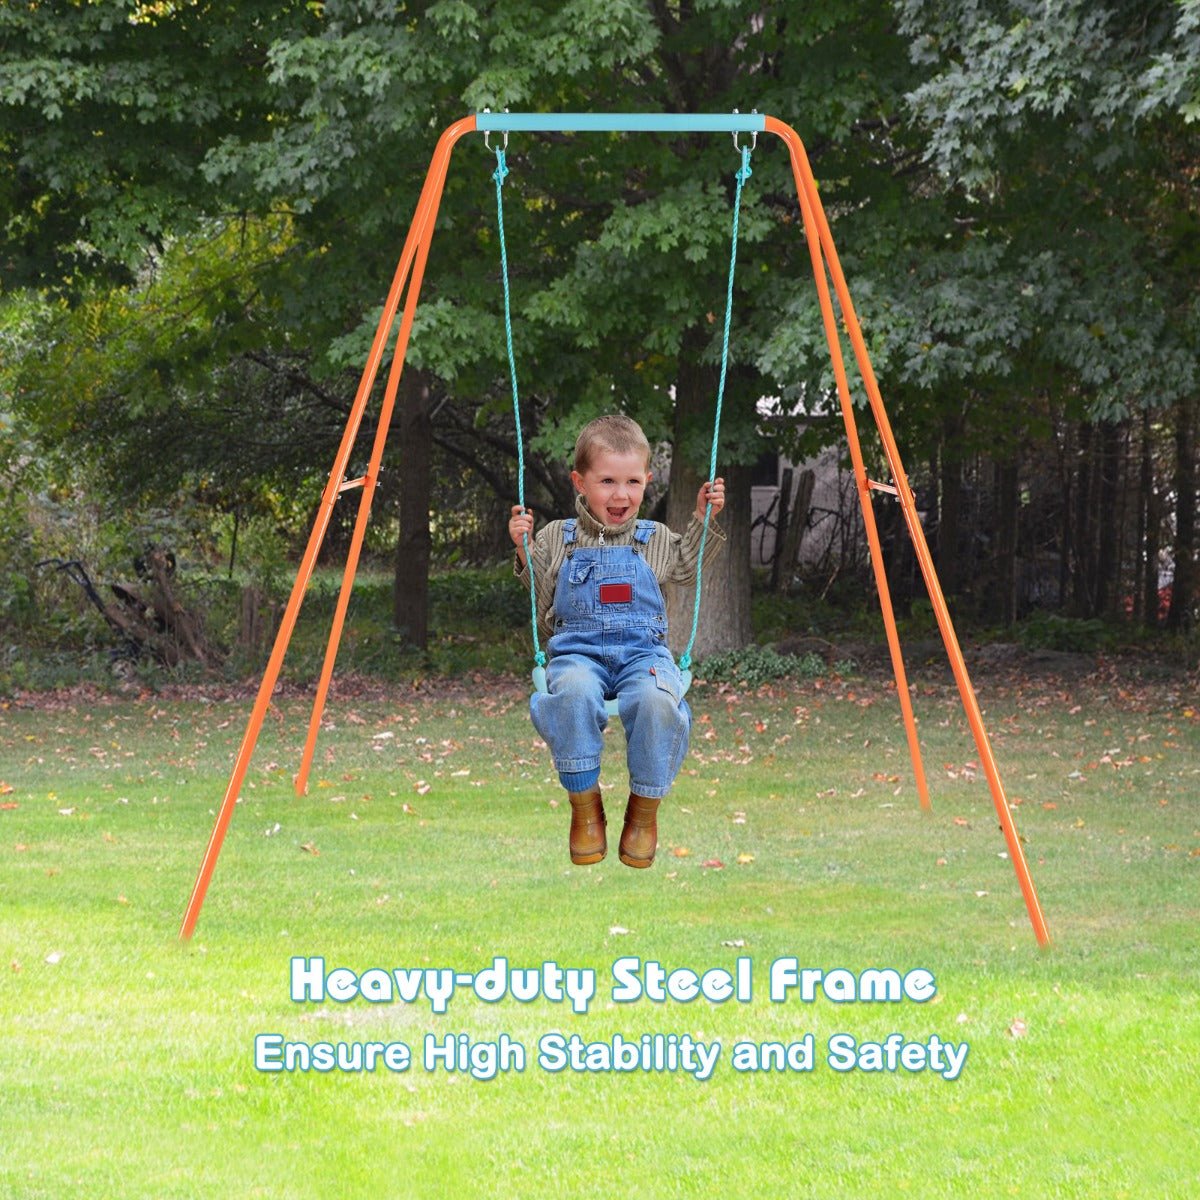 Vibrant Orange Swing Set: Sturdy A-Frame Metal Design for Play